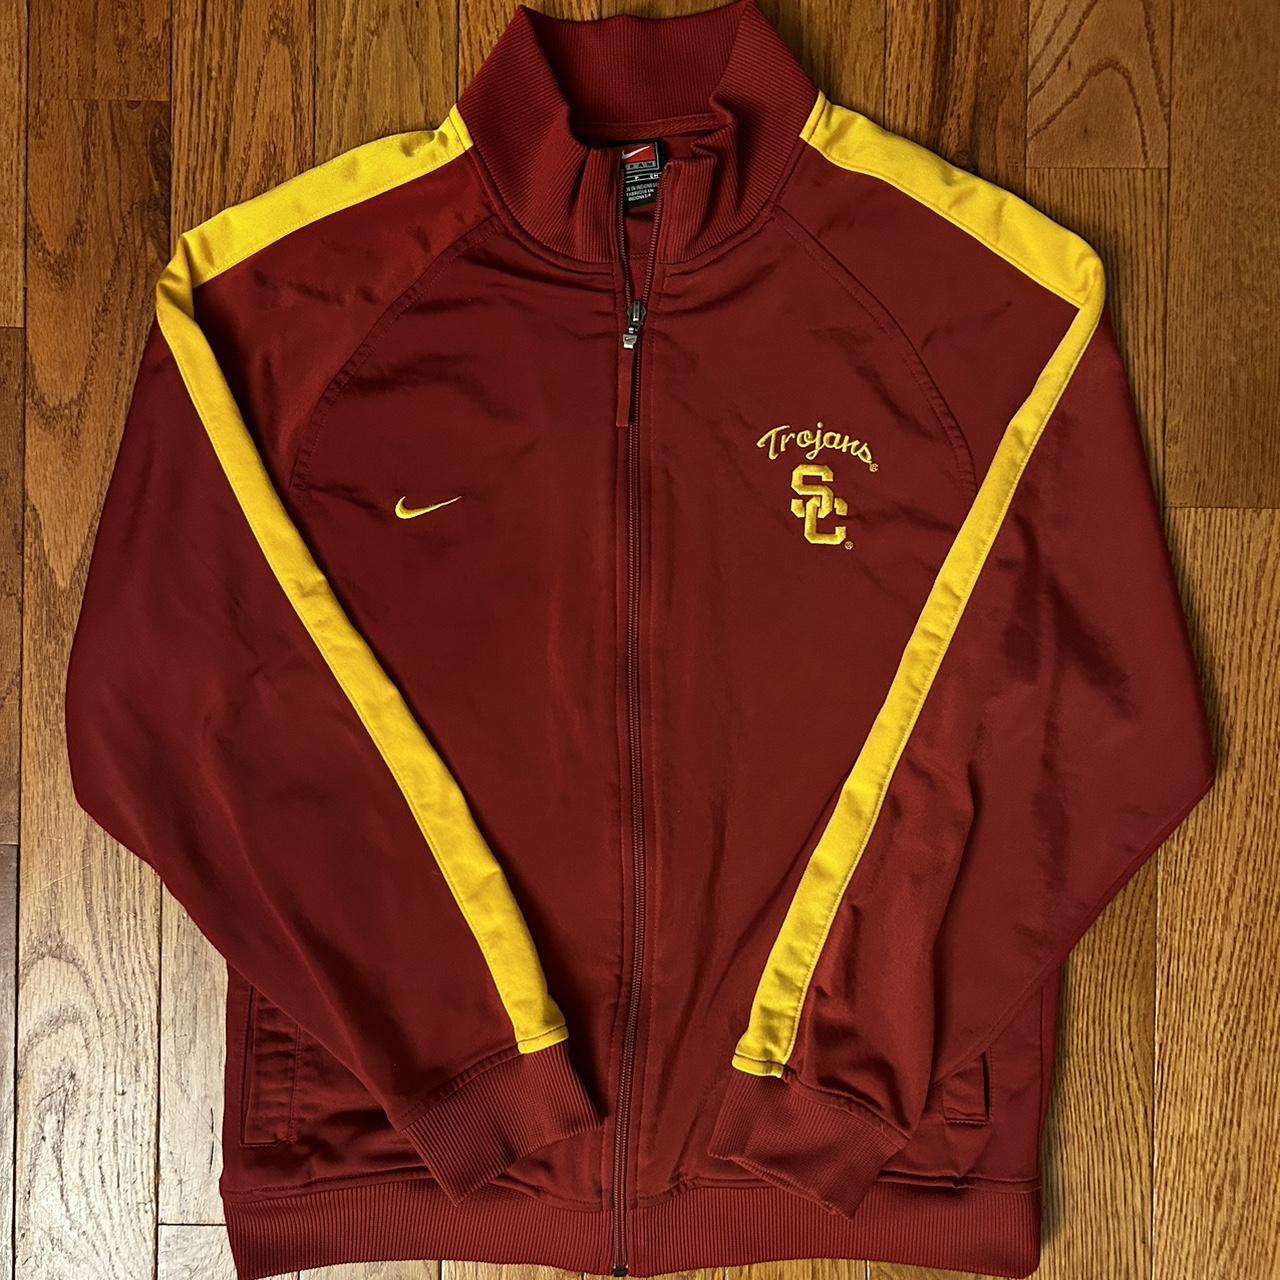 Haan Whitney Kroniek USC Trojans Nike Vintage Track Jacket Sz Small #USC... - Depop